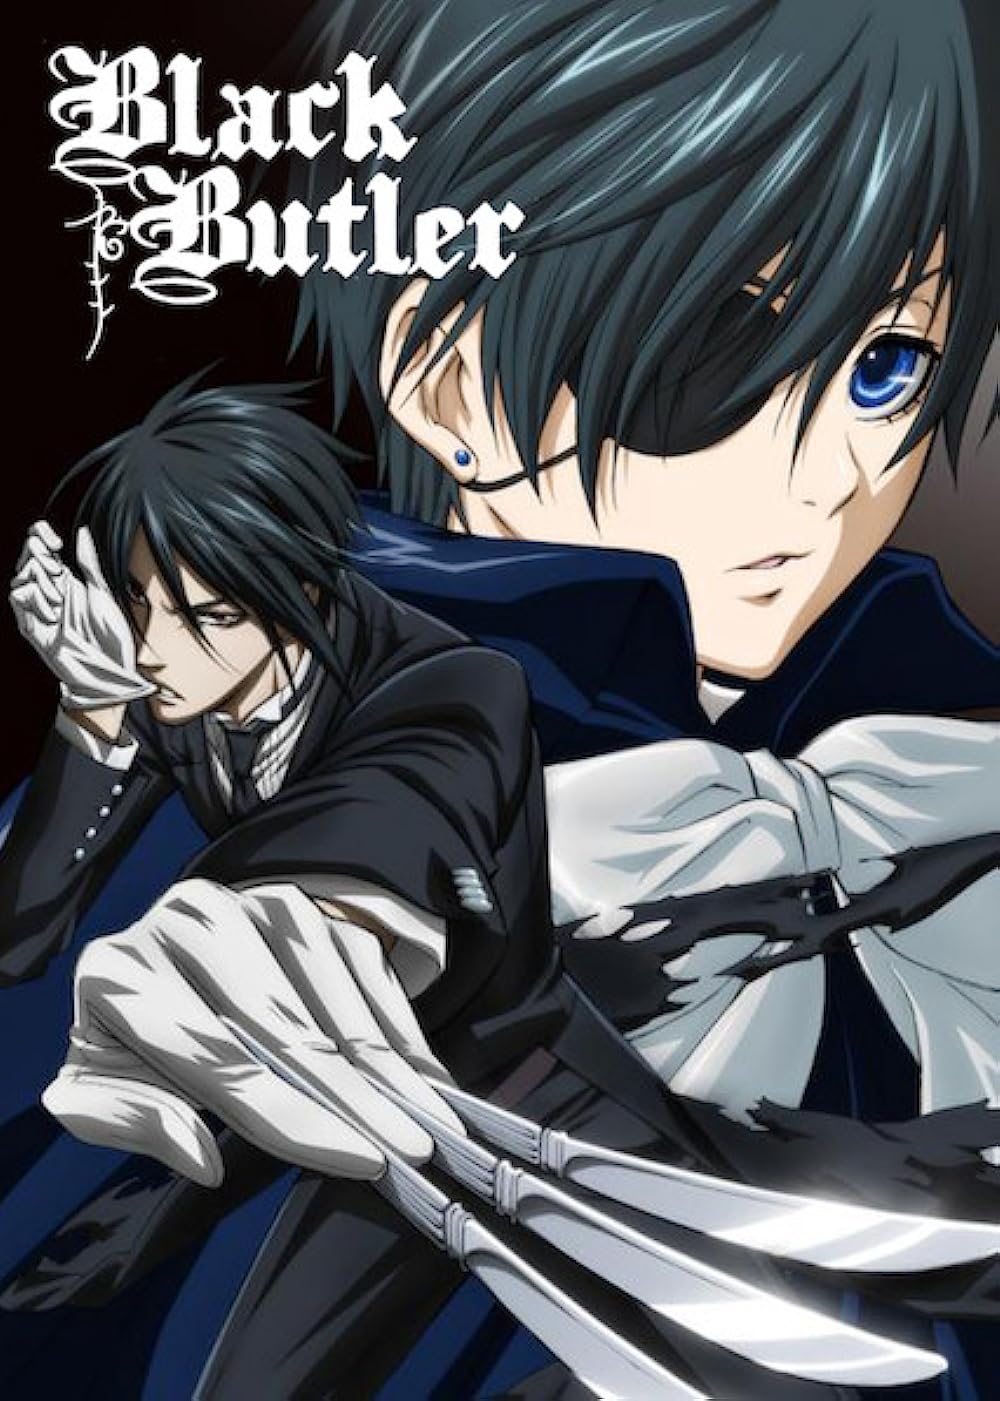 Black Butler cover